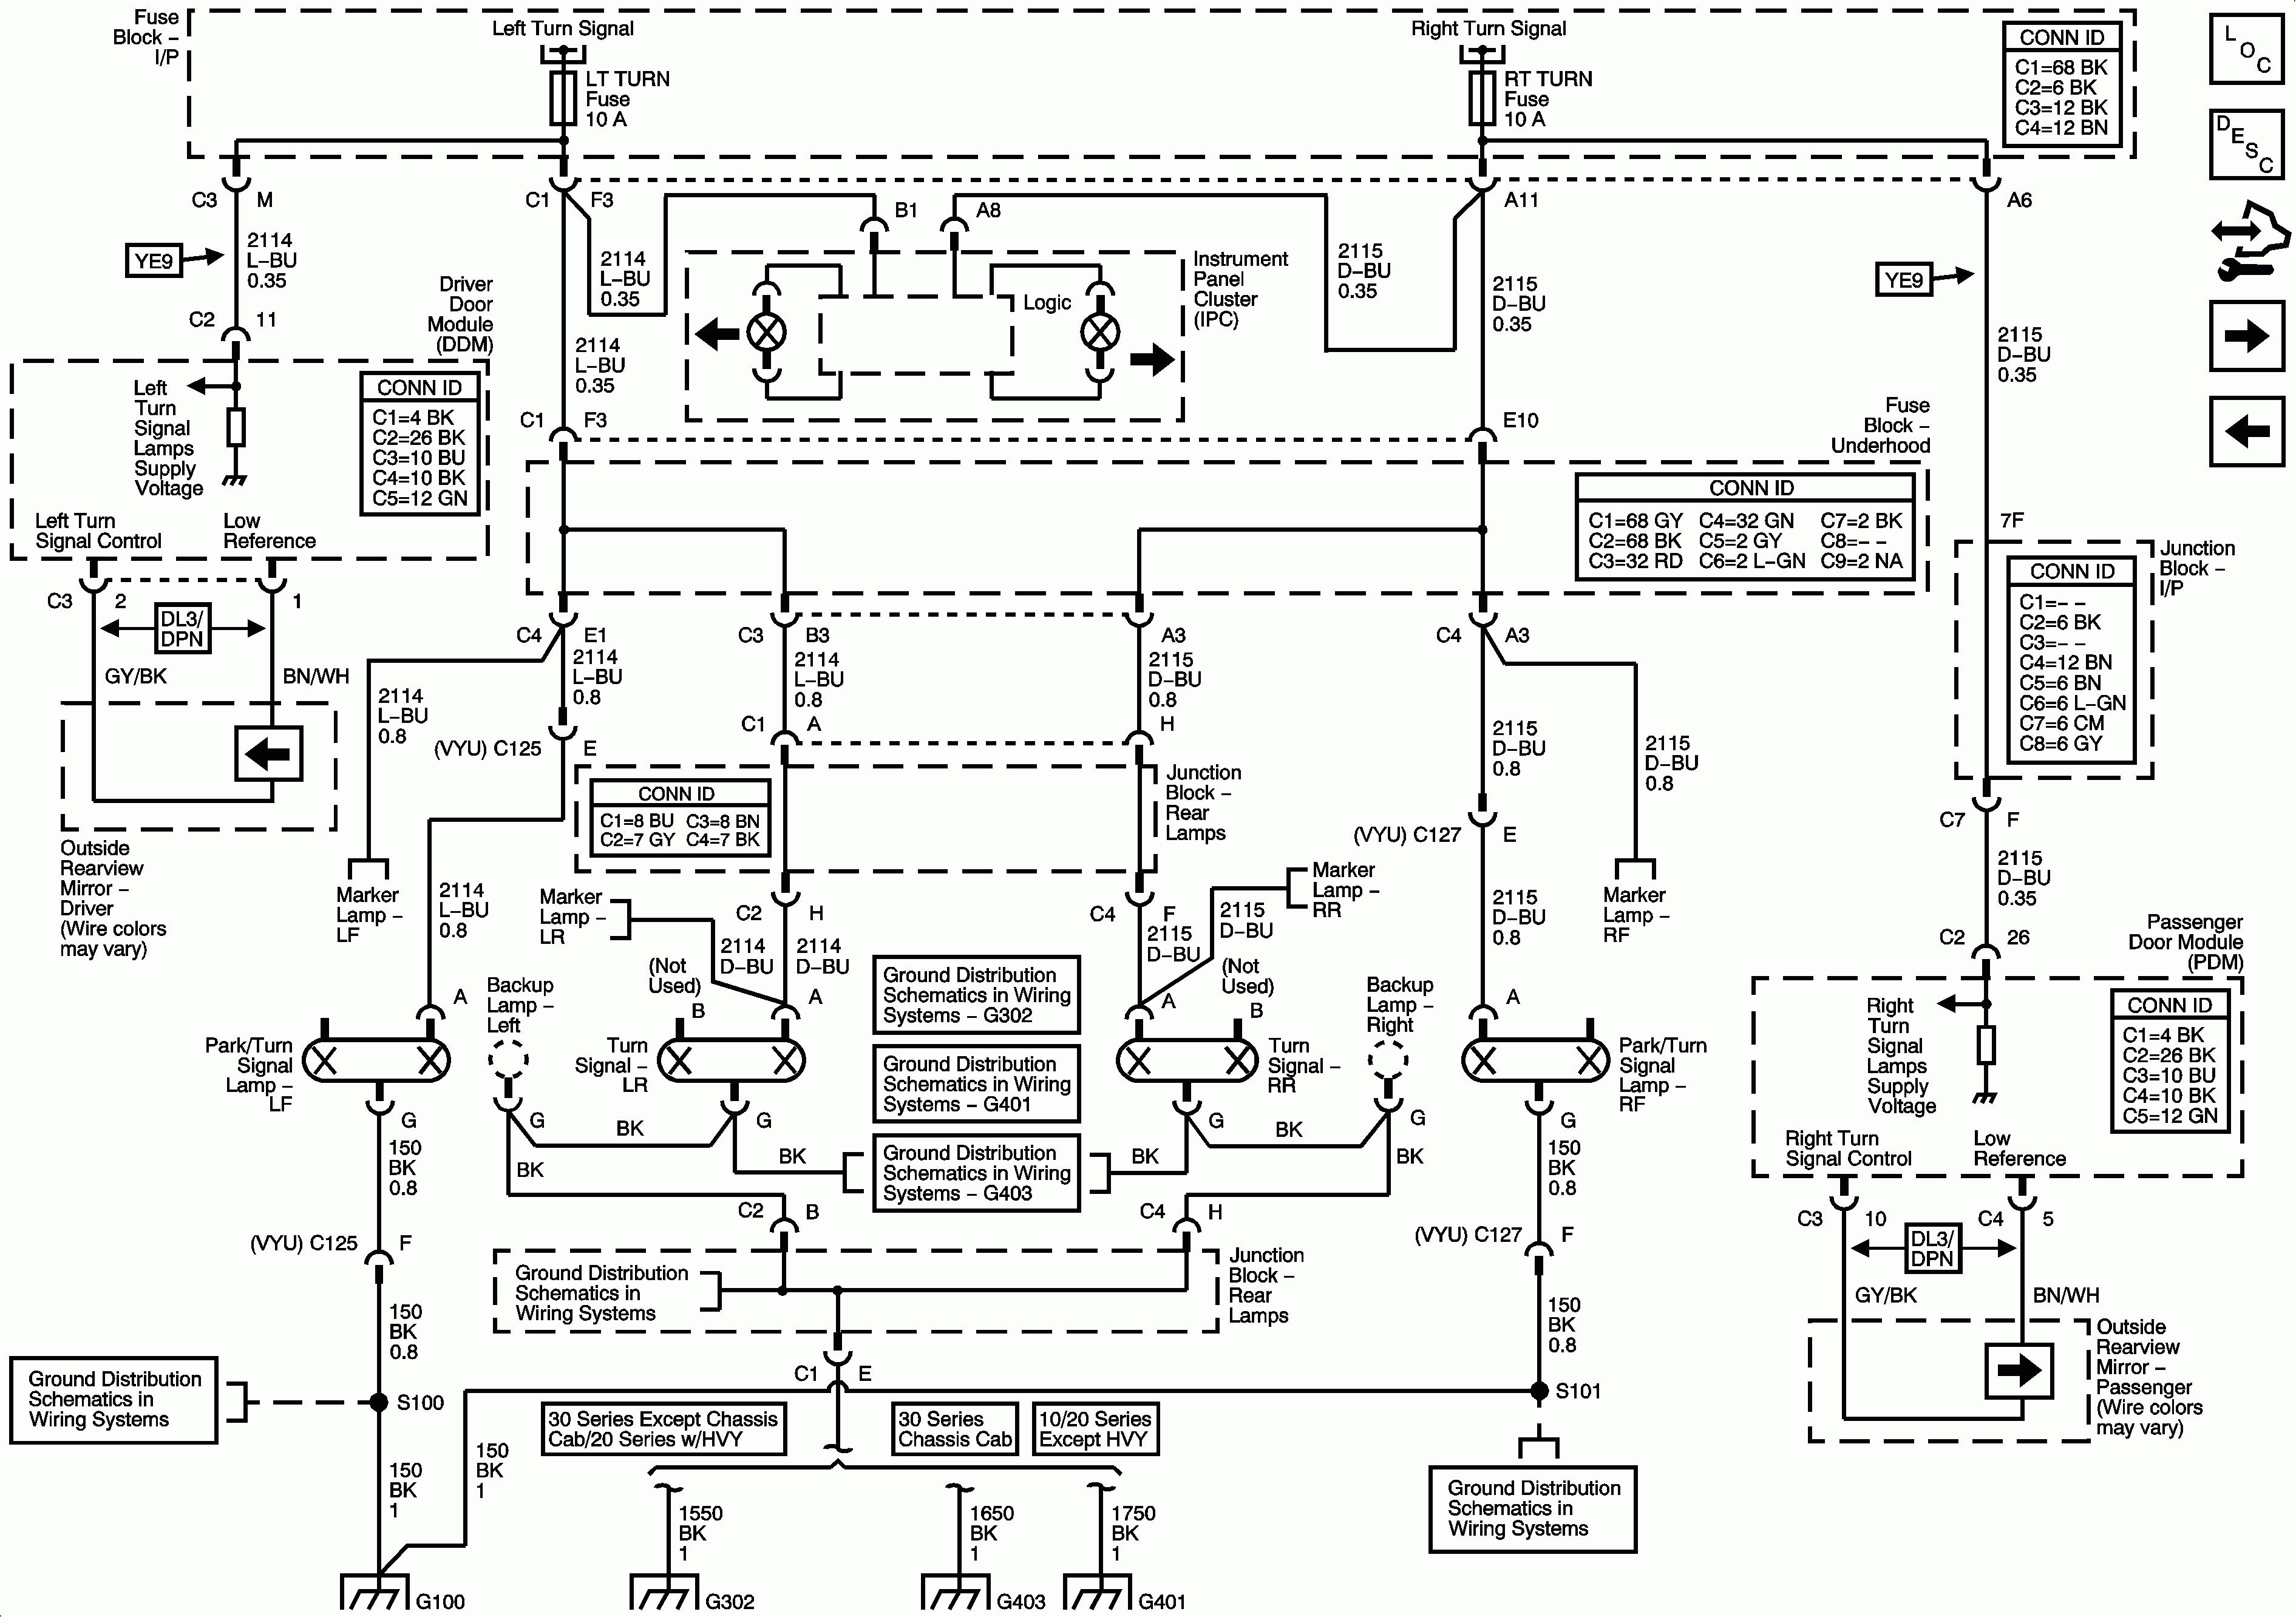 2010 Chevy Silverado Stereo Wiring Diagram - Database - Wiring Diagram